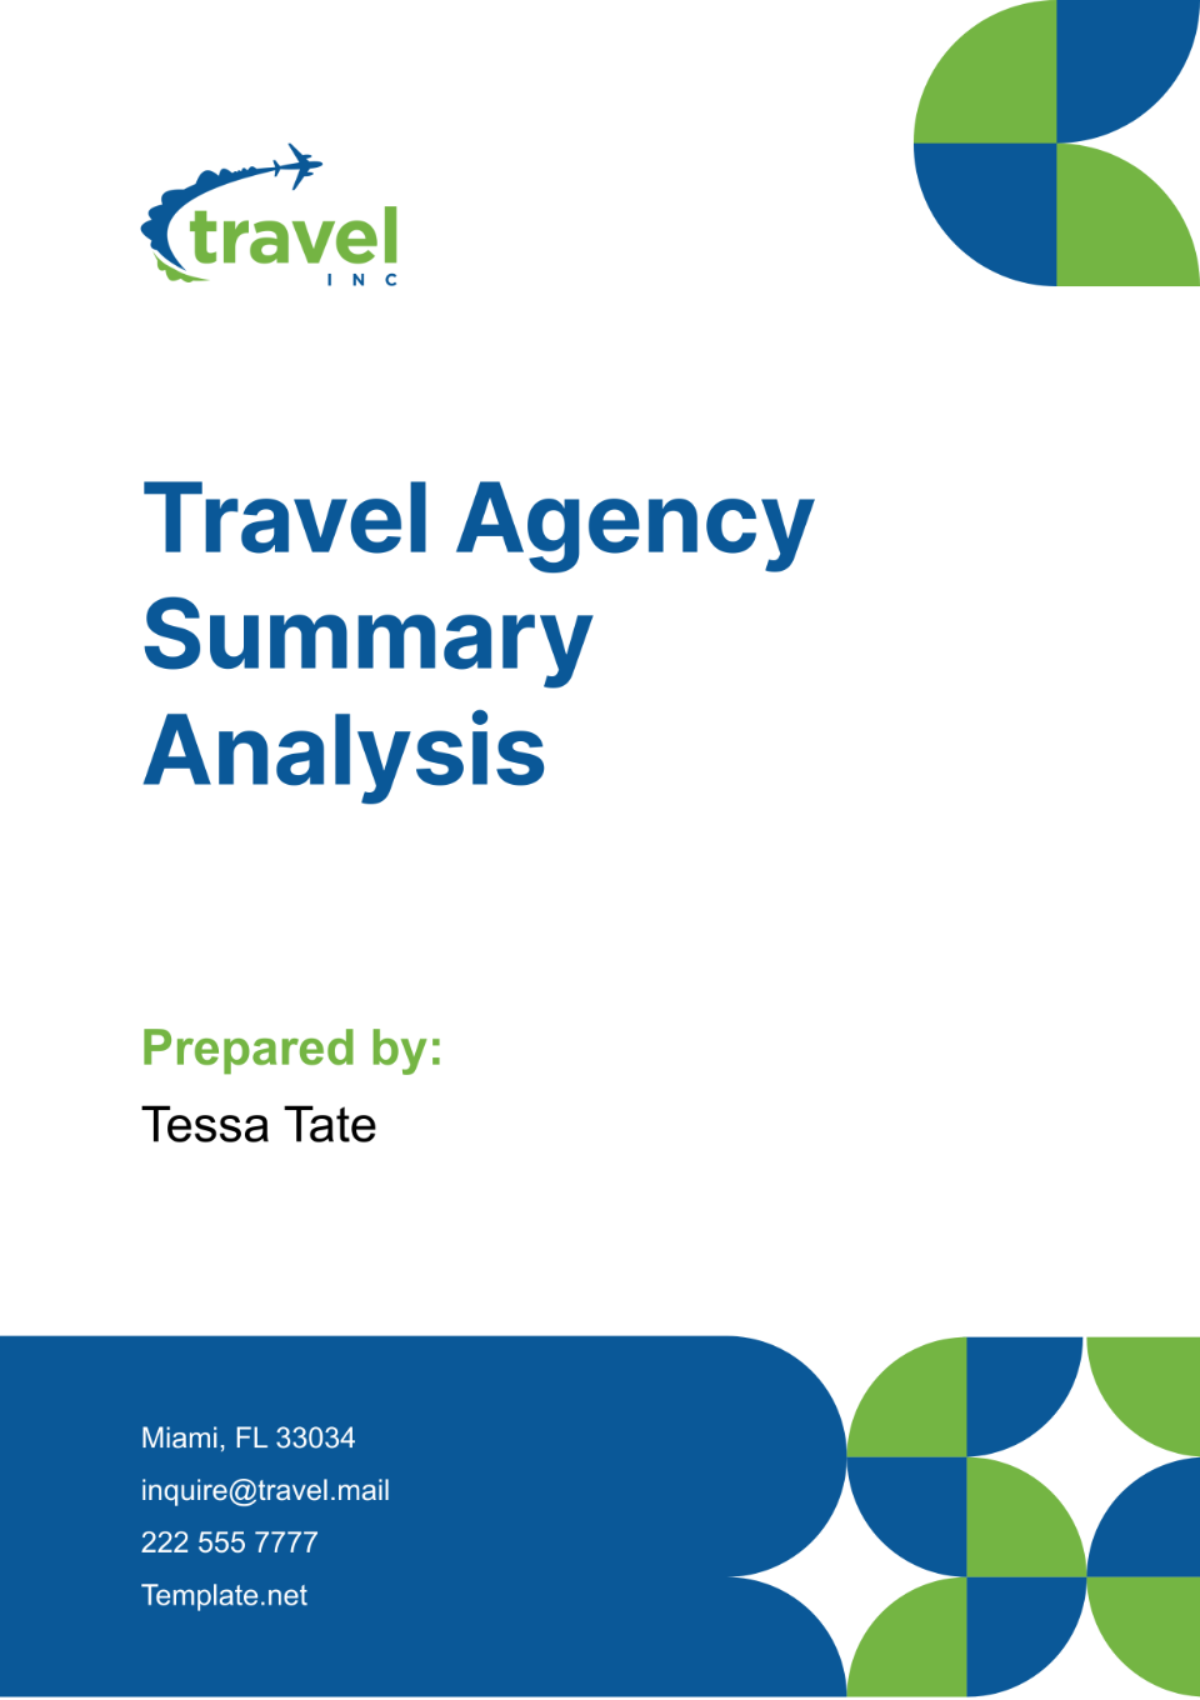 Travel Agency Summary Analysis Template